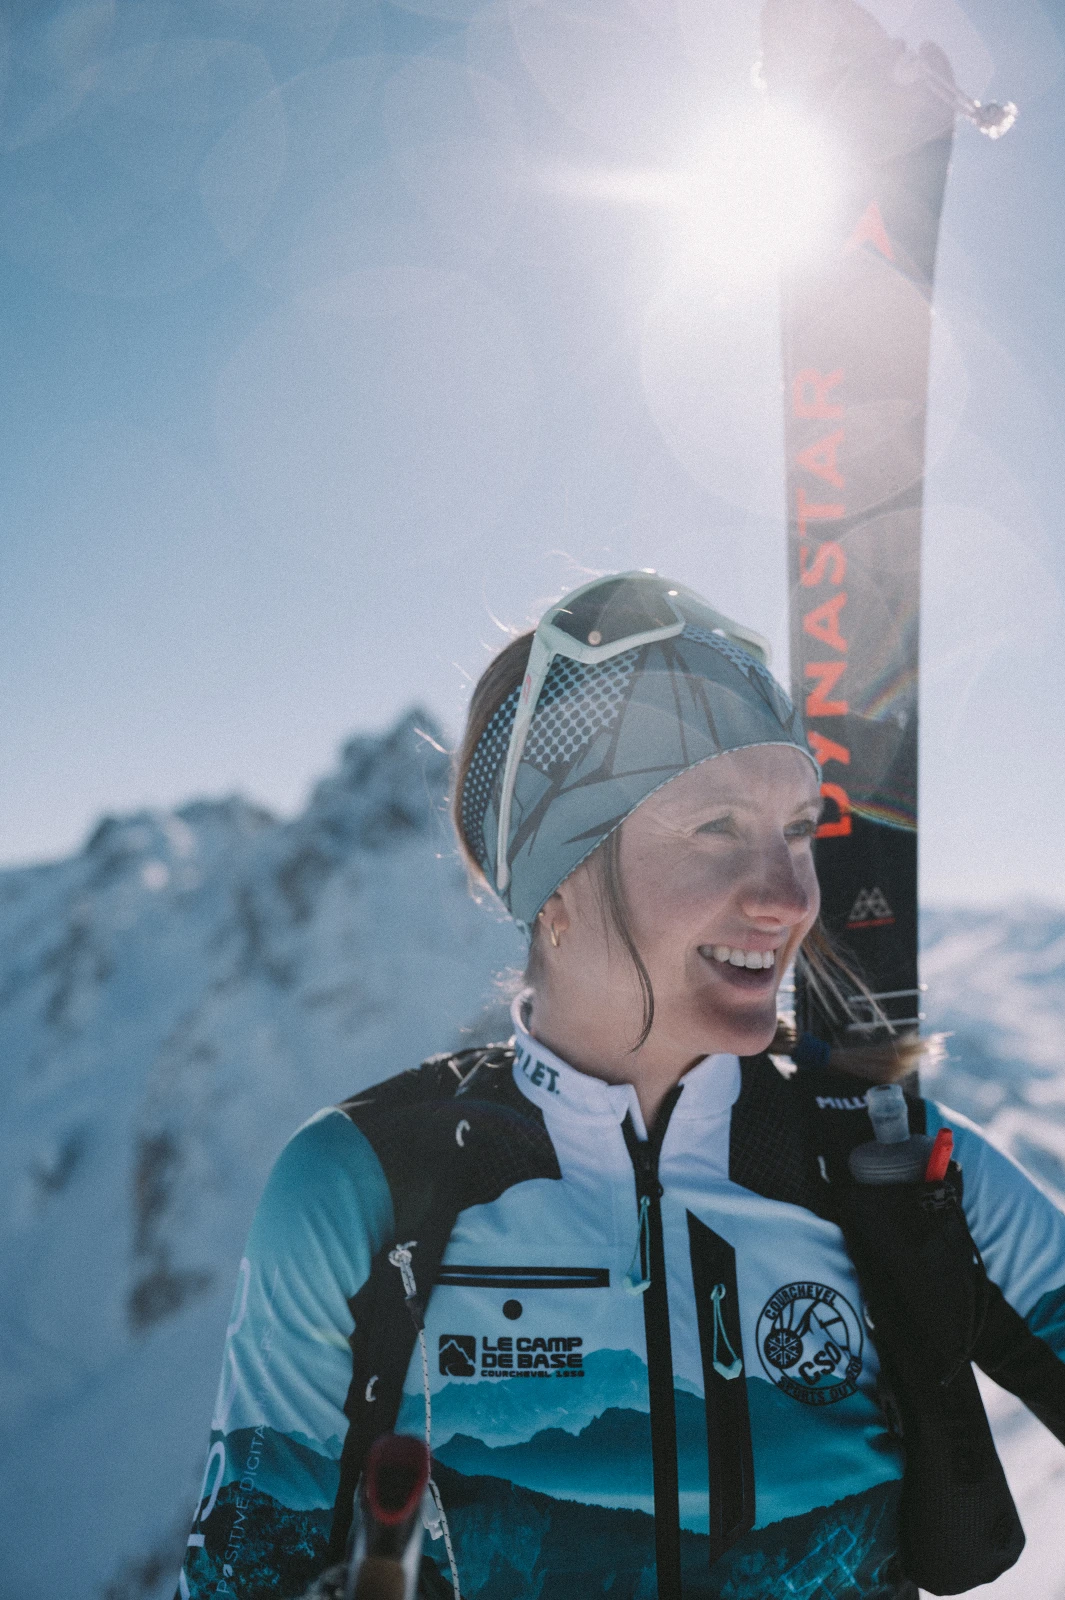 Emily Harrop compétition ski dynastar